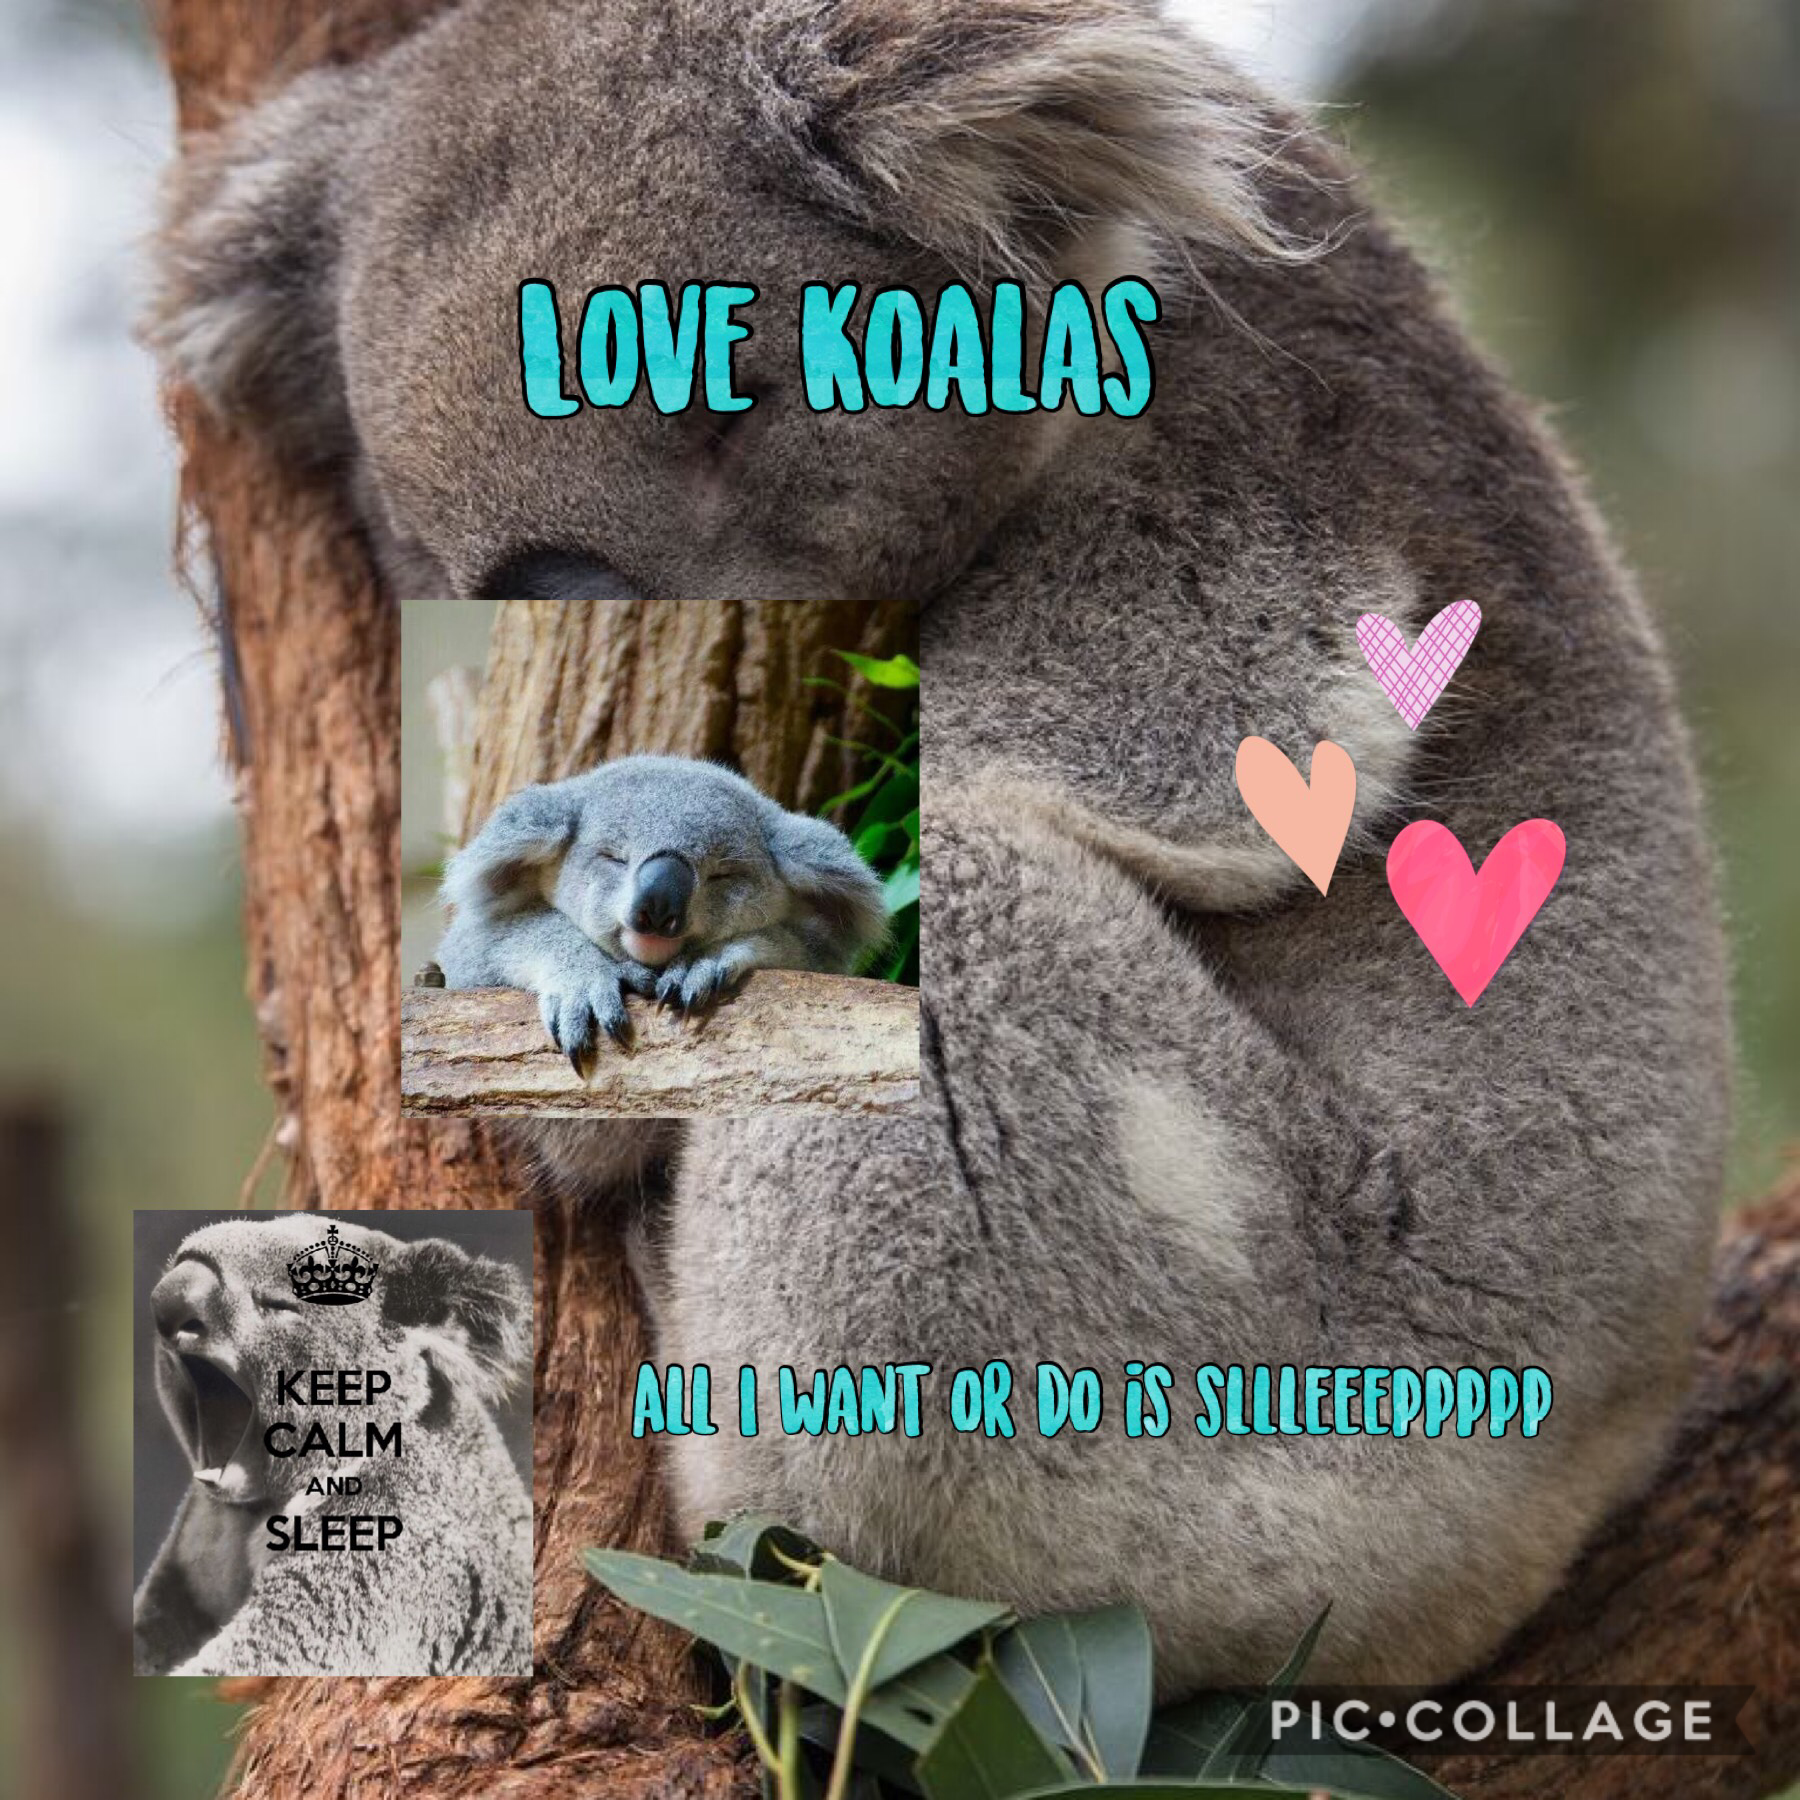 Love koalas 🐨 